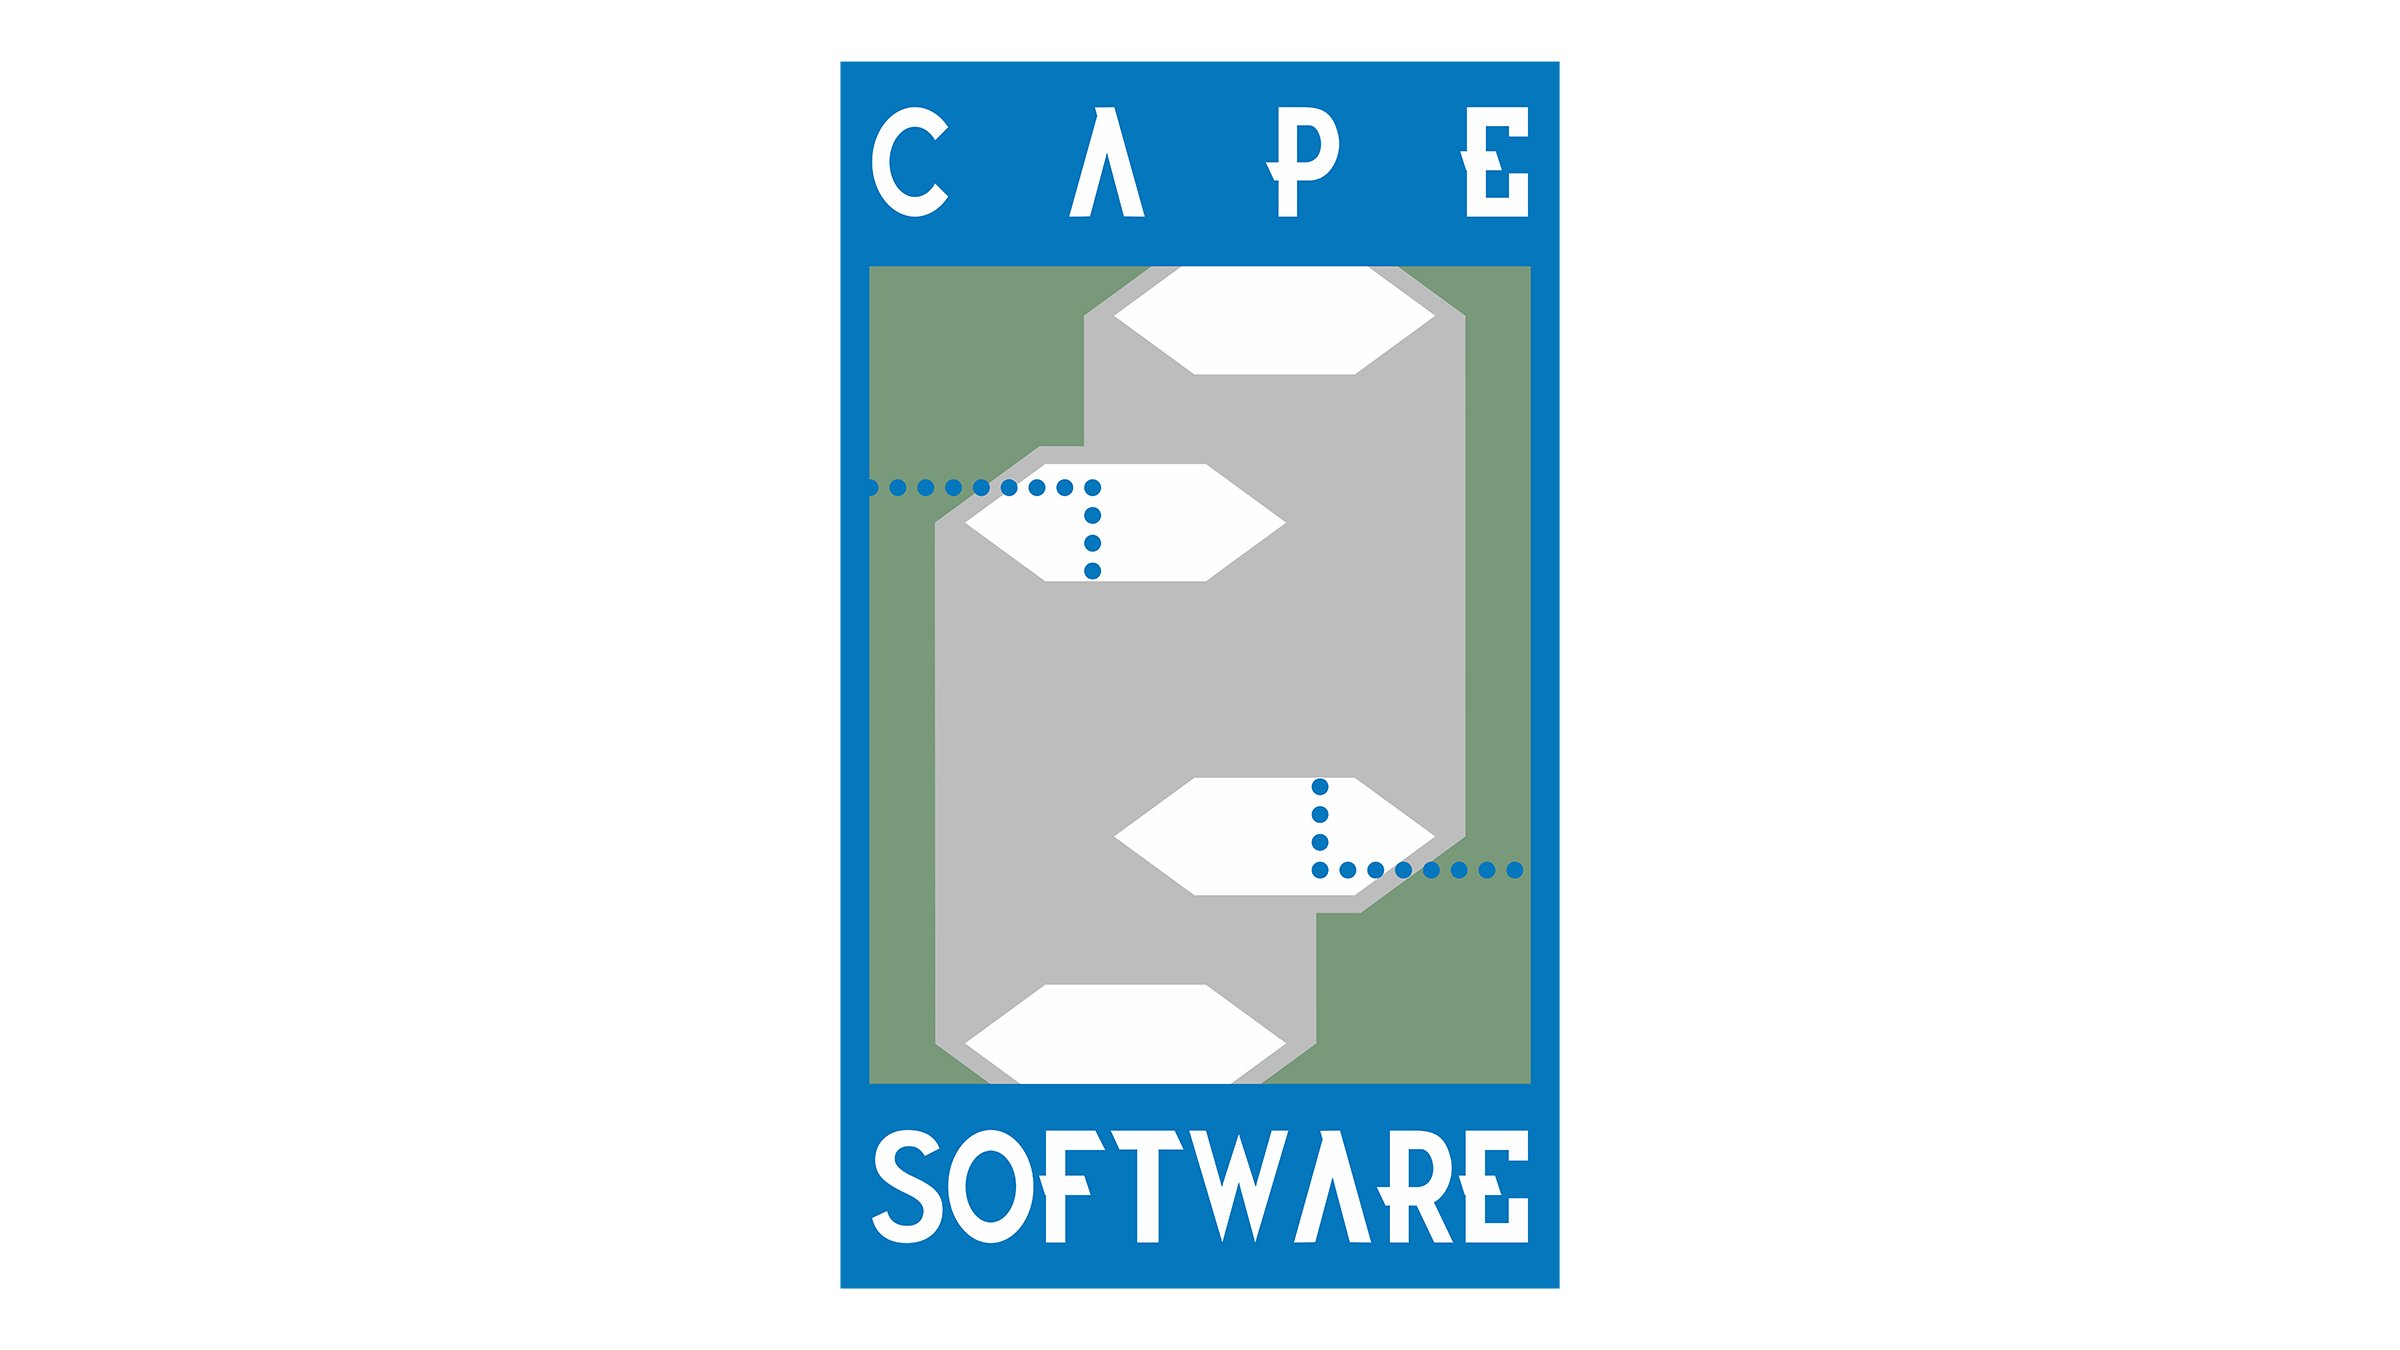 Cape Software company logo